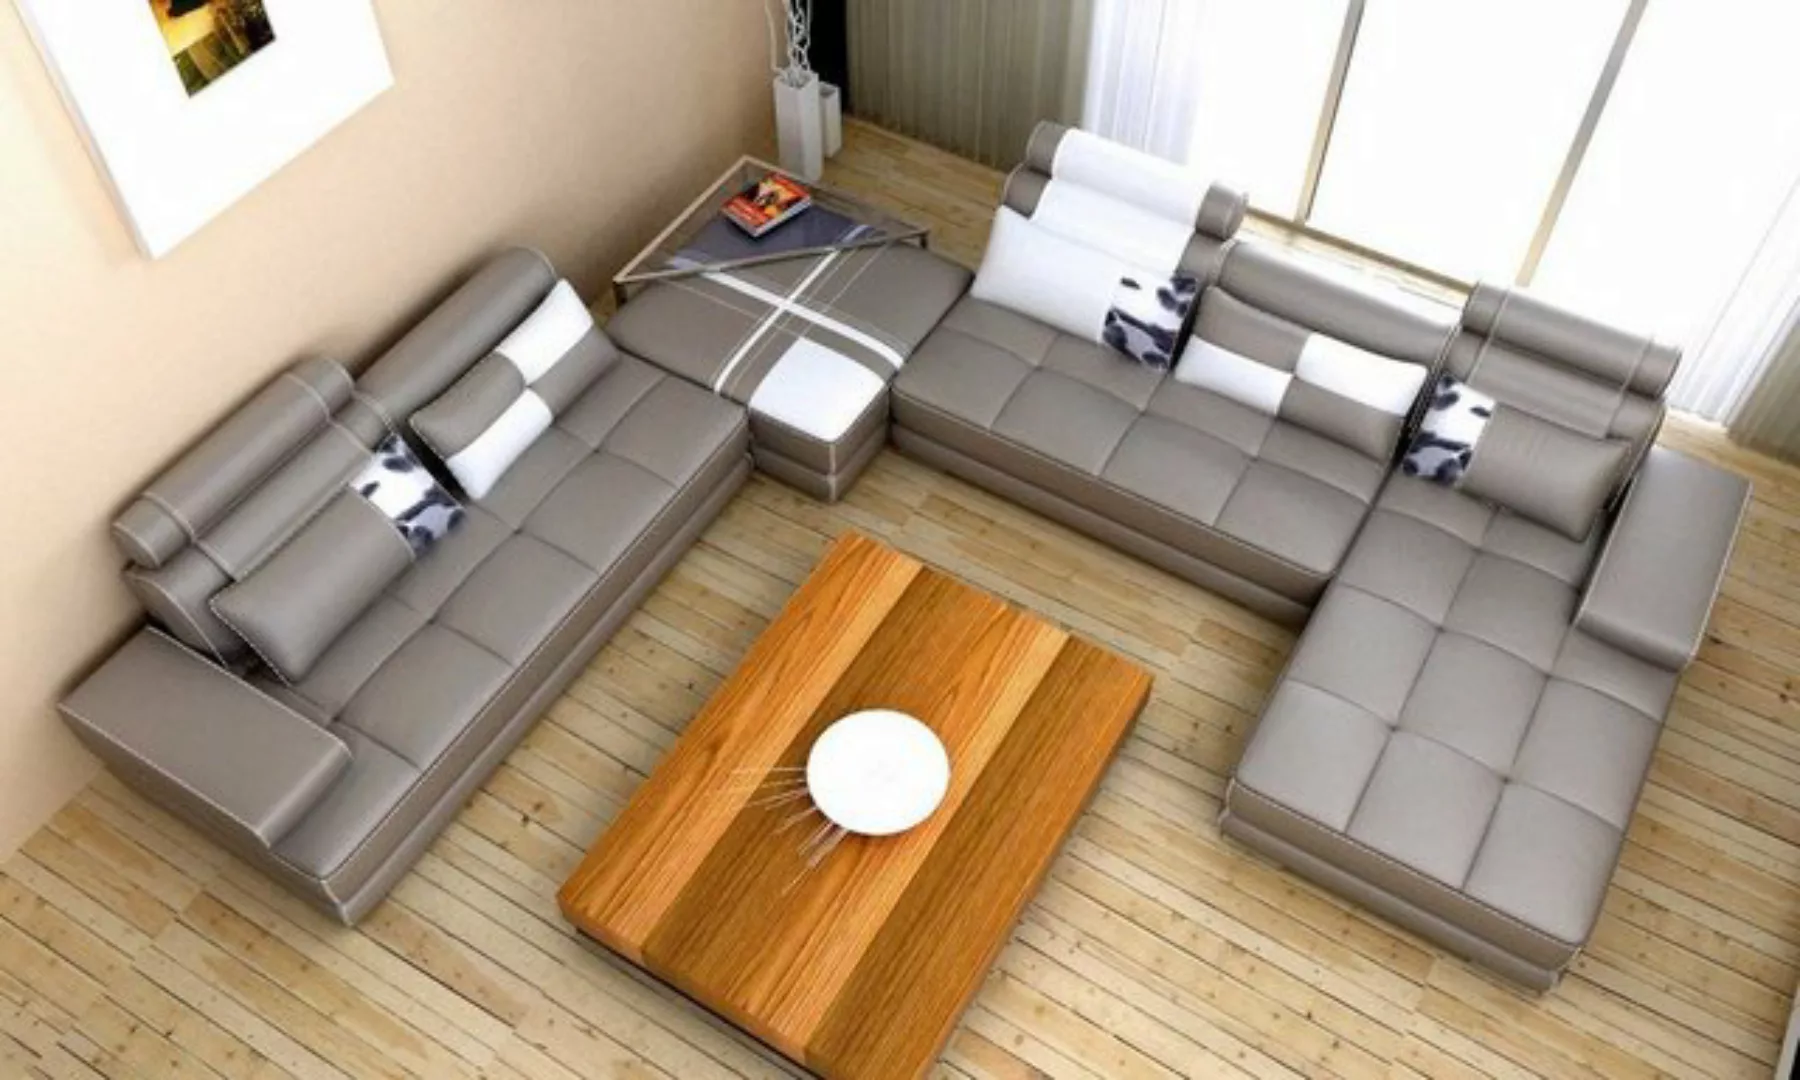 JVmoebel Ecksofa Sofas Wohnlandschaft Design Ecksofa Leder Neu U Form Sofa, günstig online kaufen